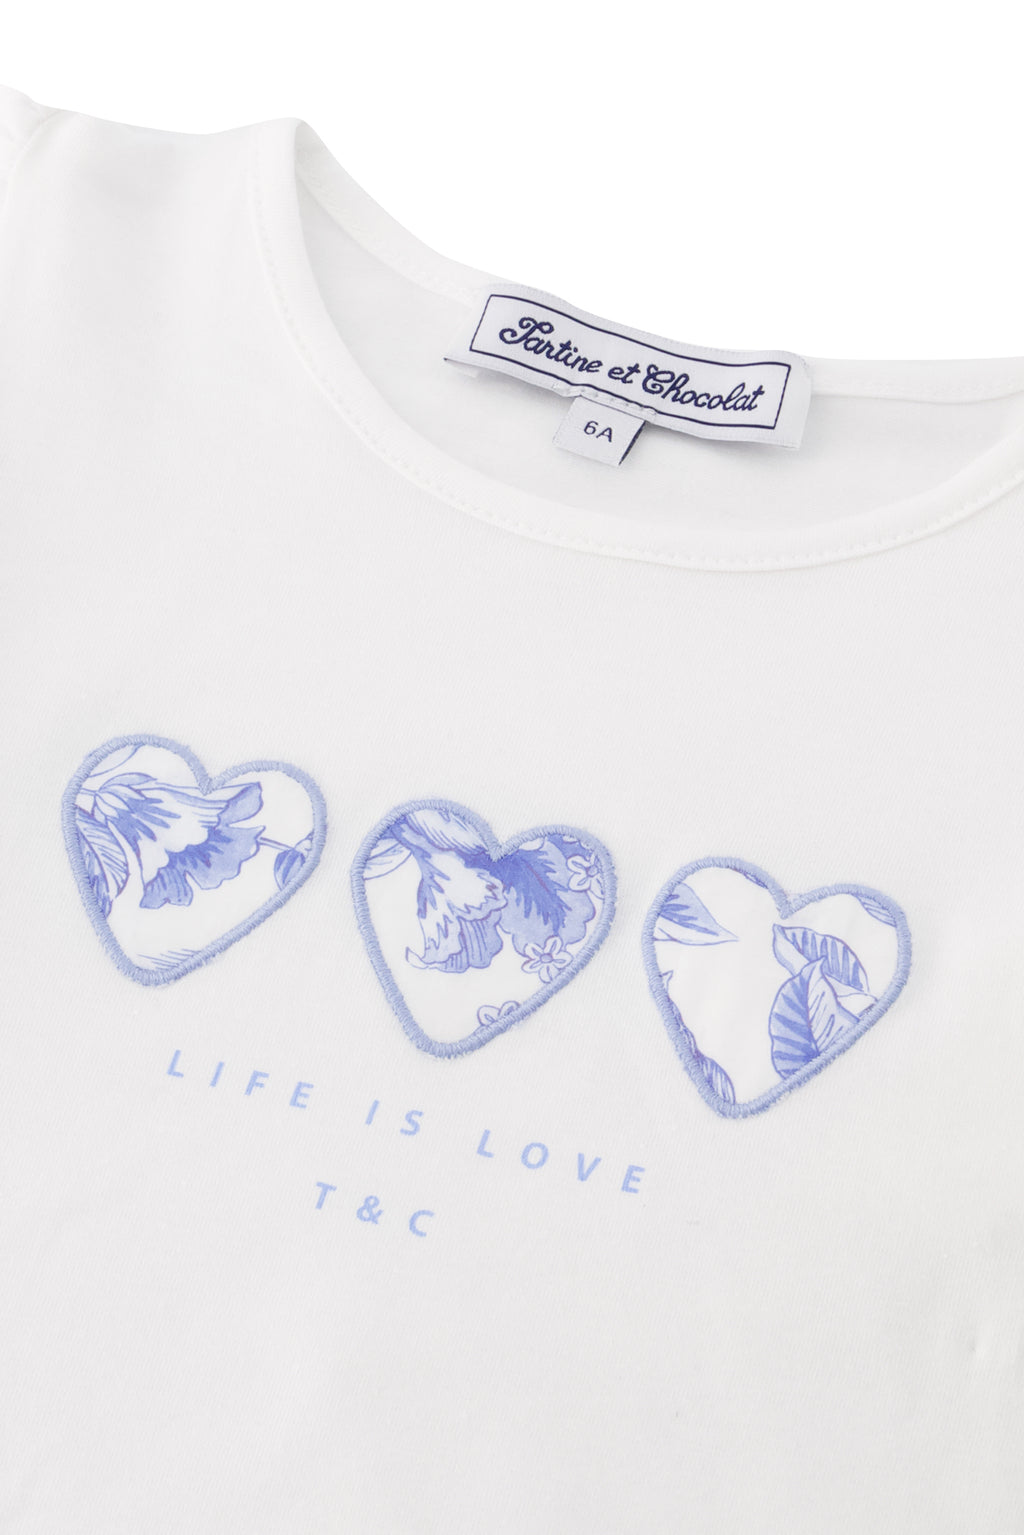 T -Shirt - Weiss Illustration Herzstoff Liberty